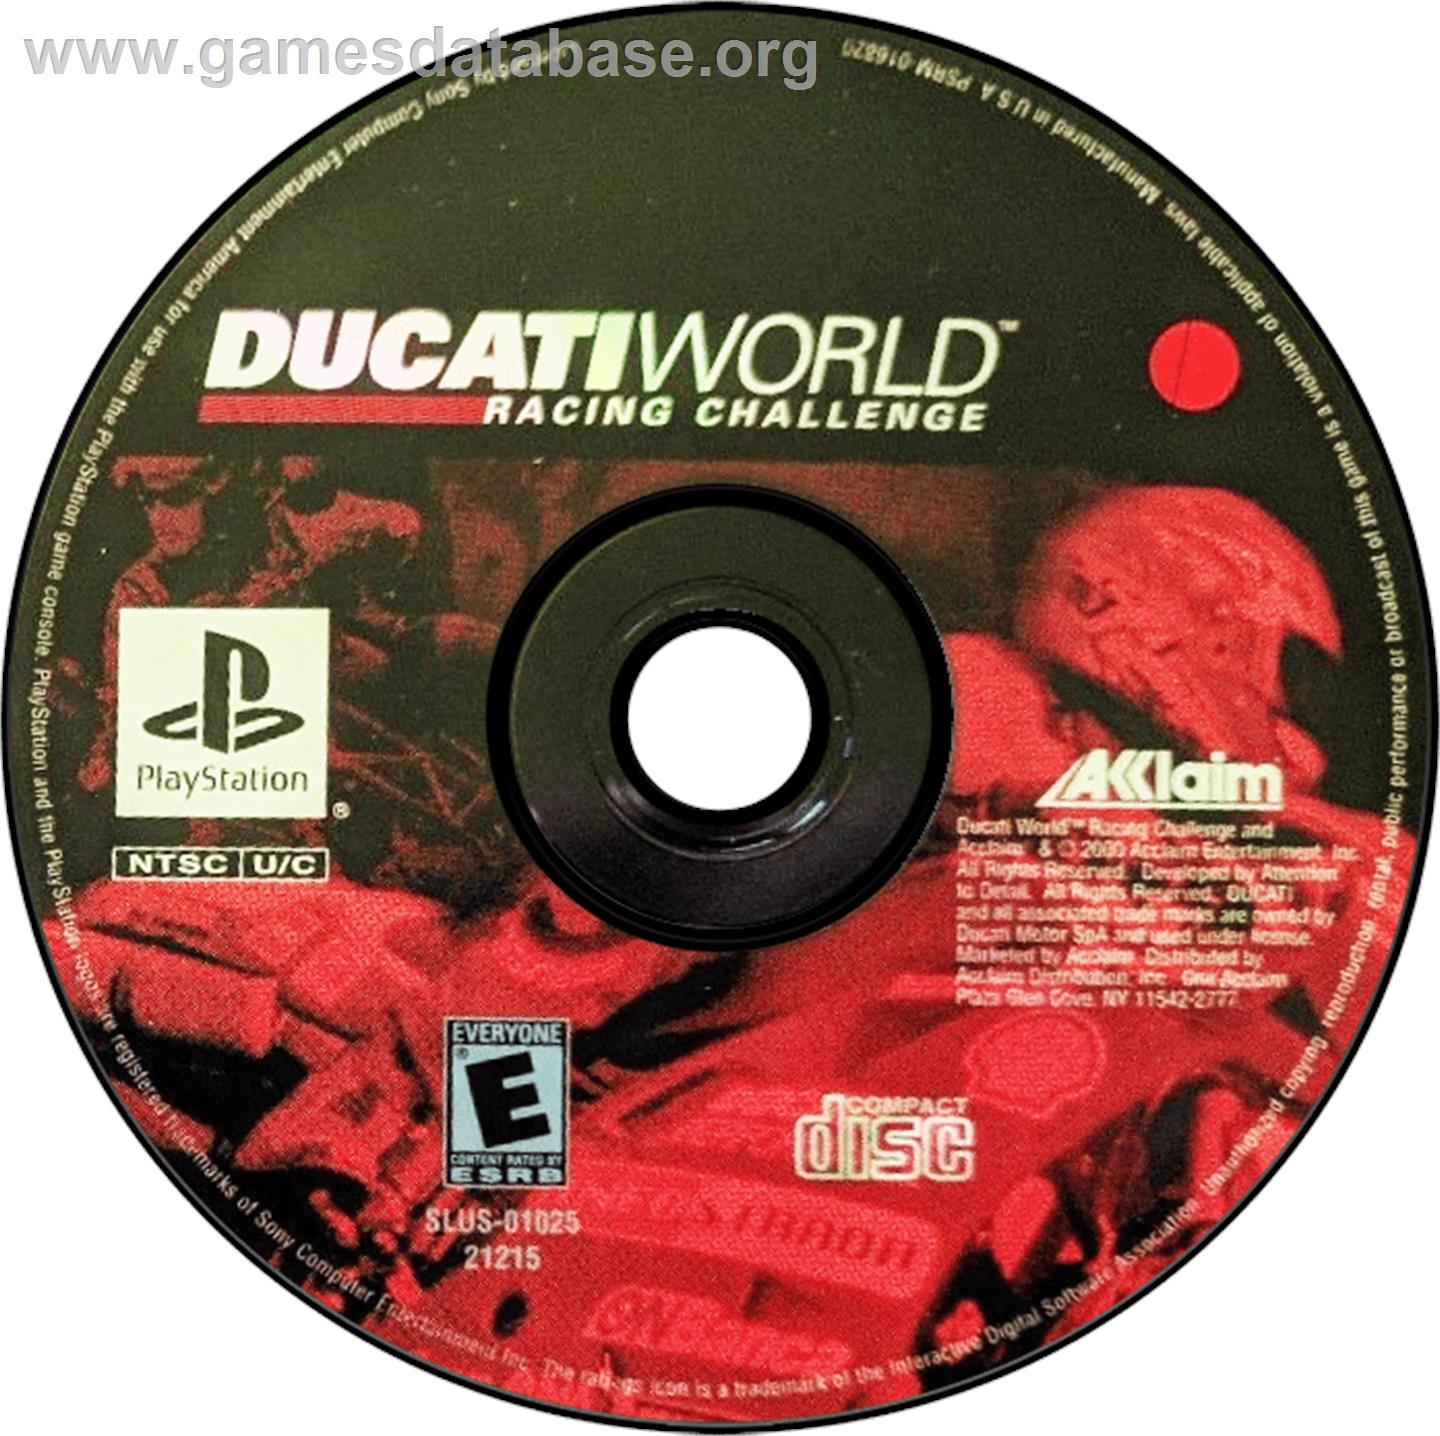 Ducati World: Racing Challenge - Sony Playstation - Artwork - Disc